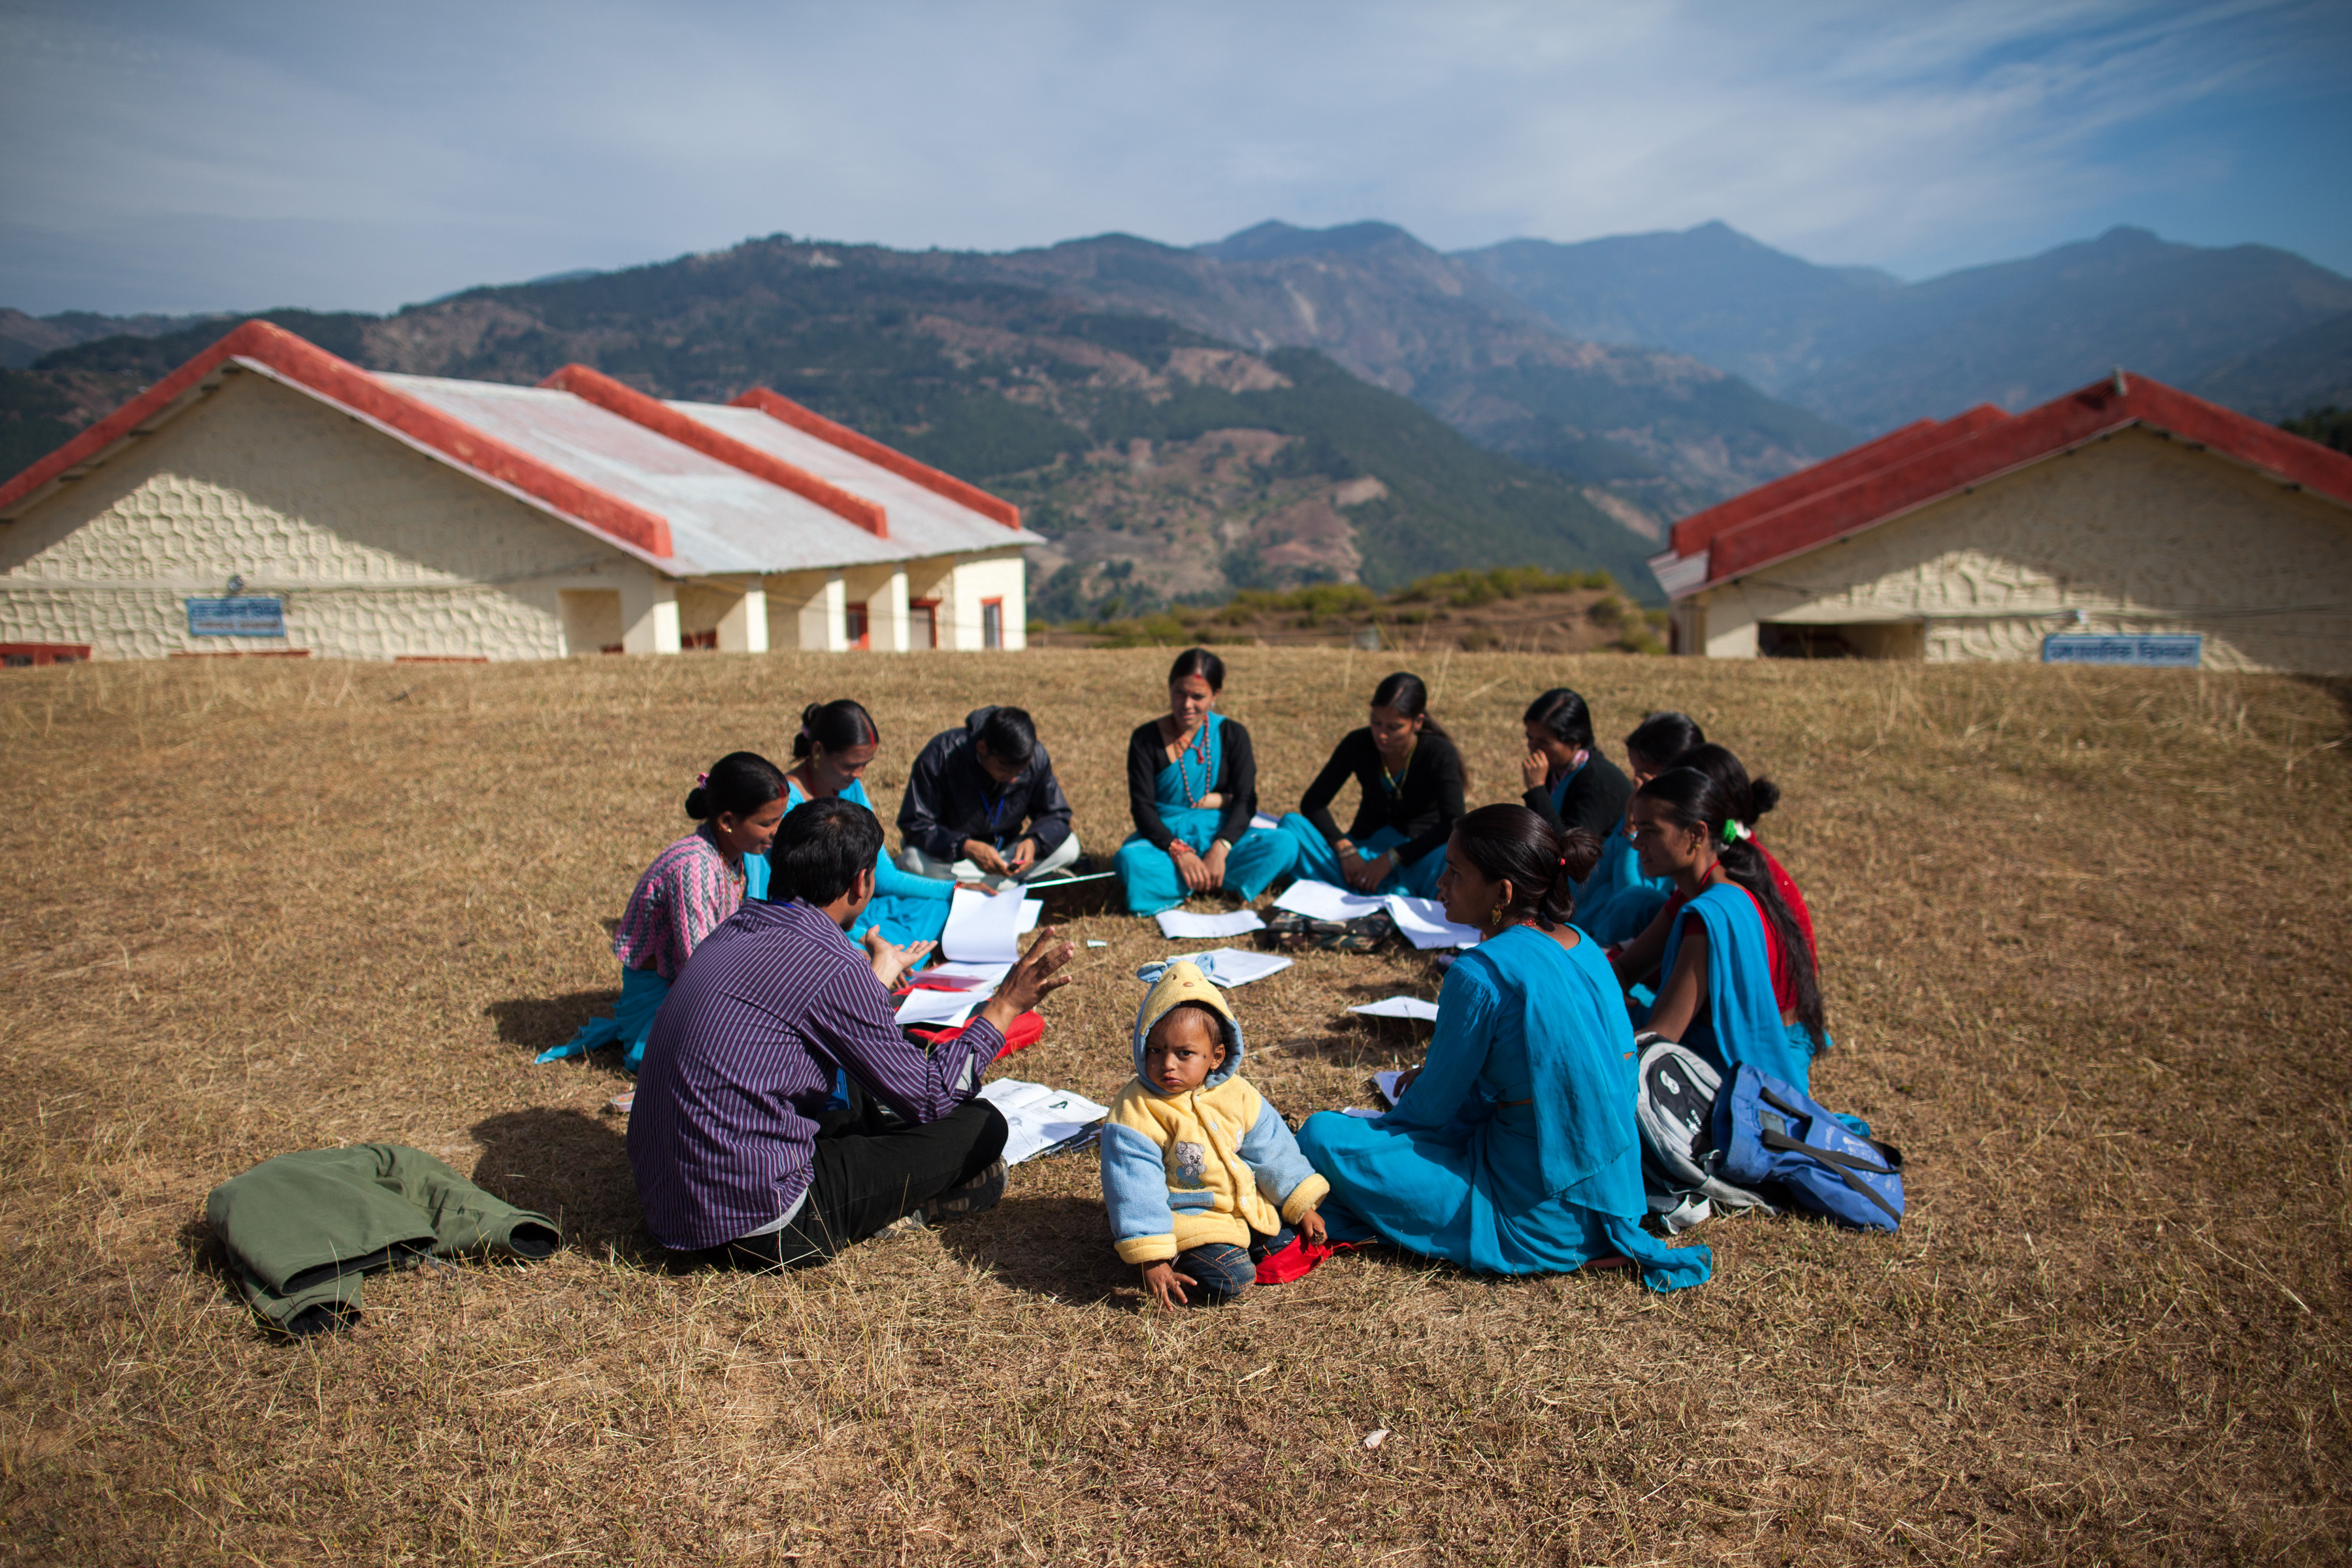 Chaupadi Nepali Womens Monthly Exile Pulitzer Center